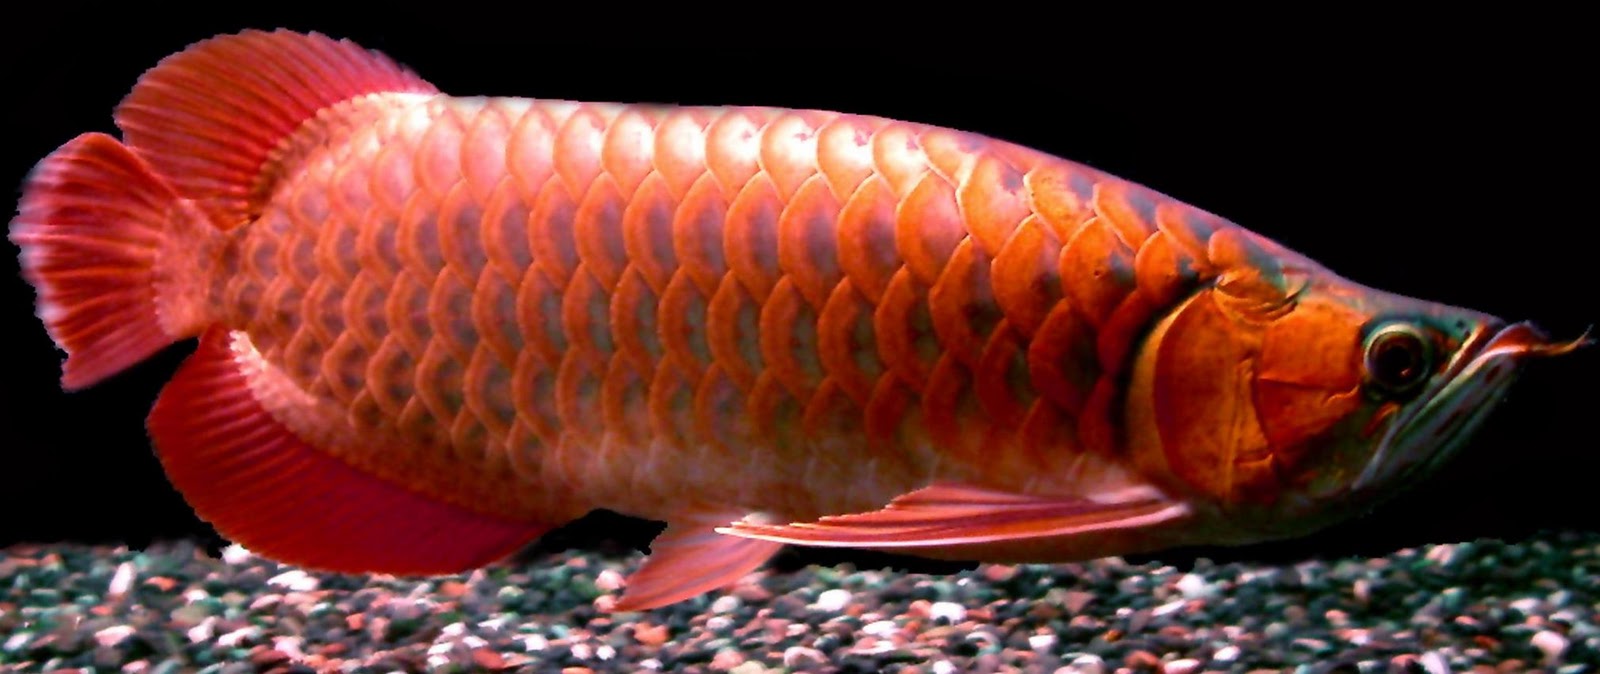 ORNAMENTAL FISH AQUARIUM: Cattle Red Arowana Fish